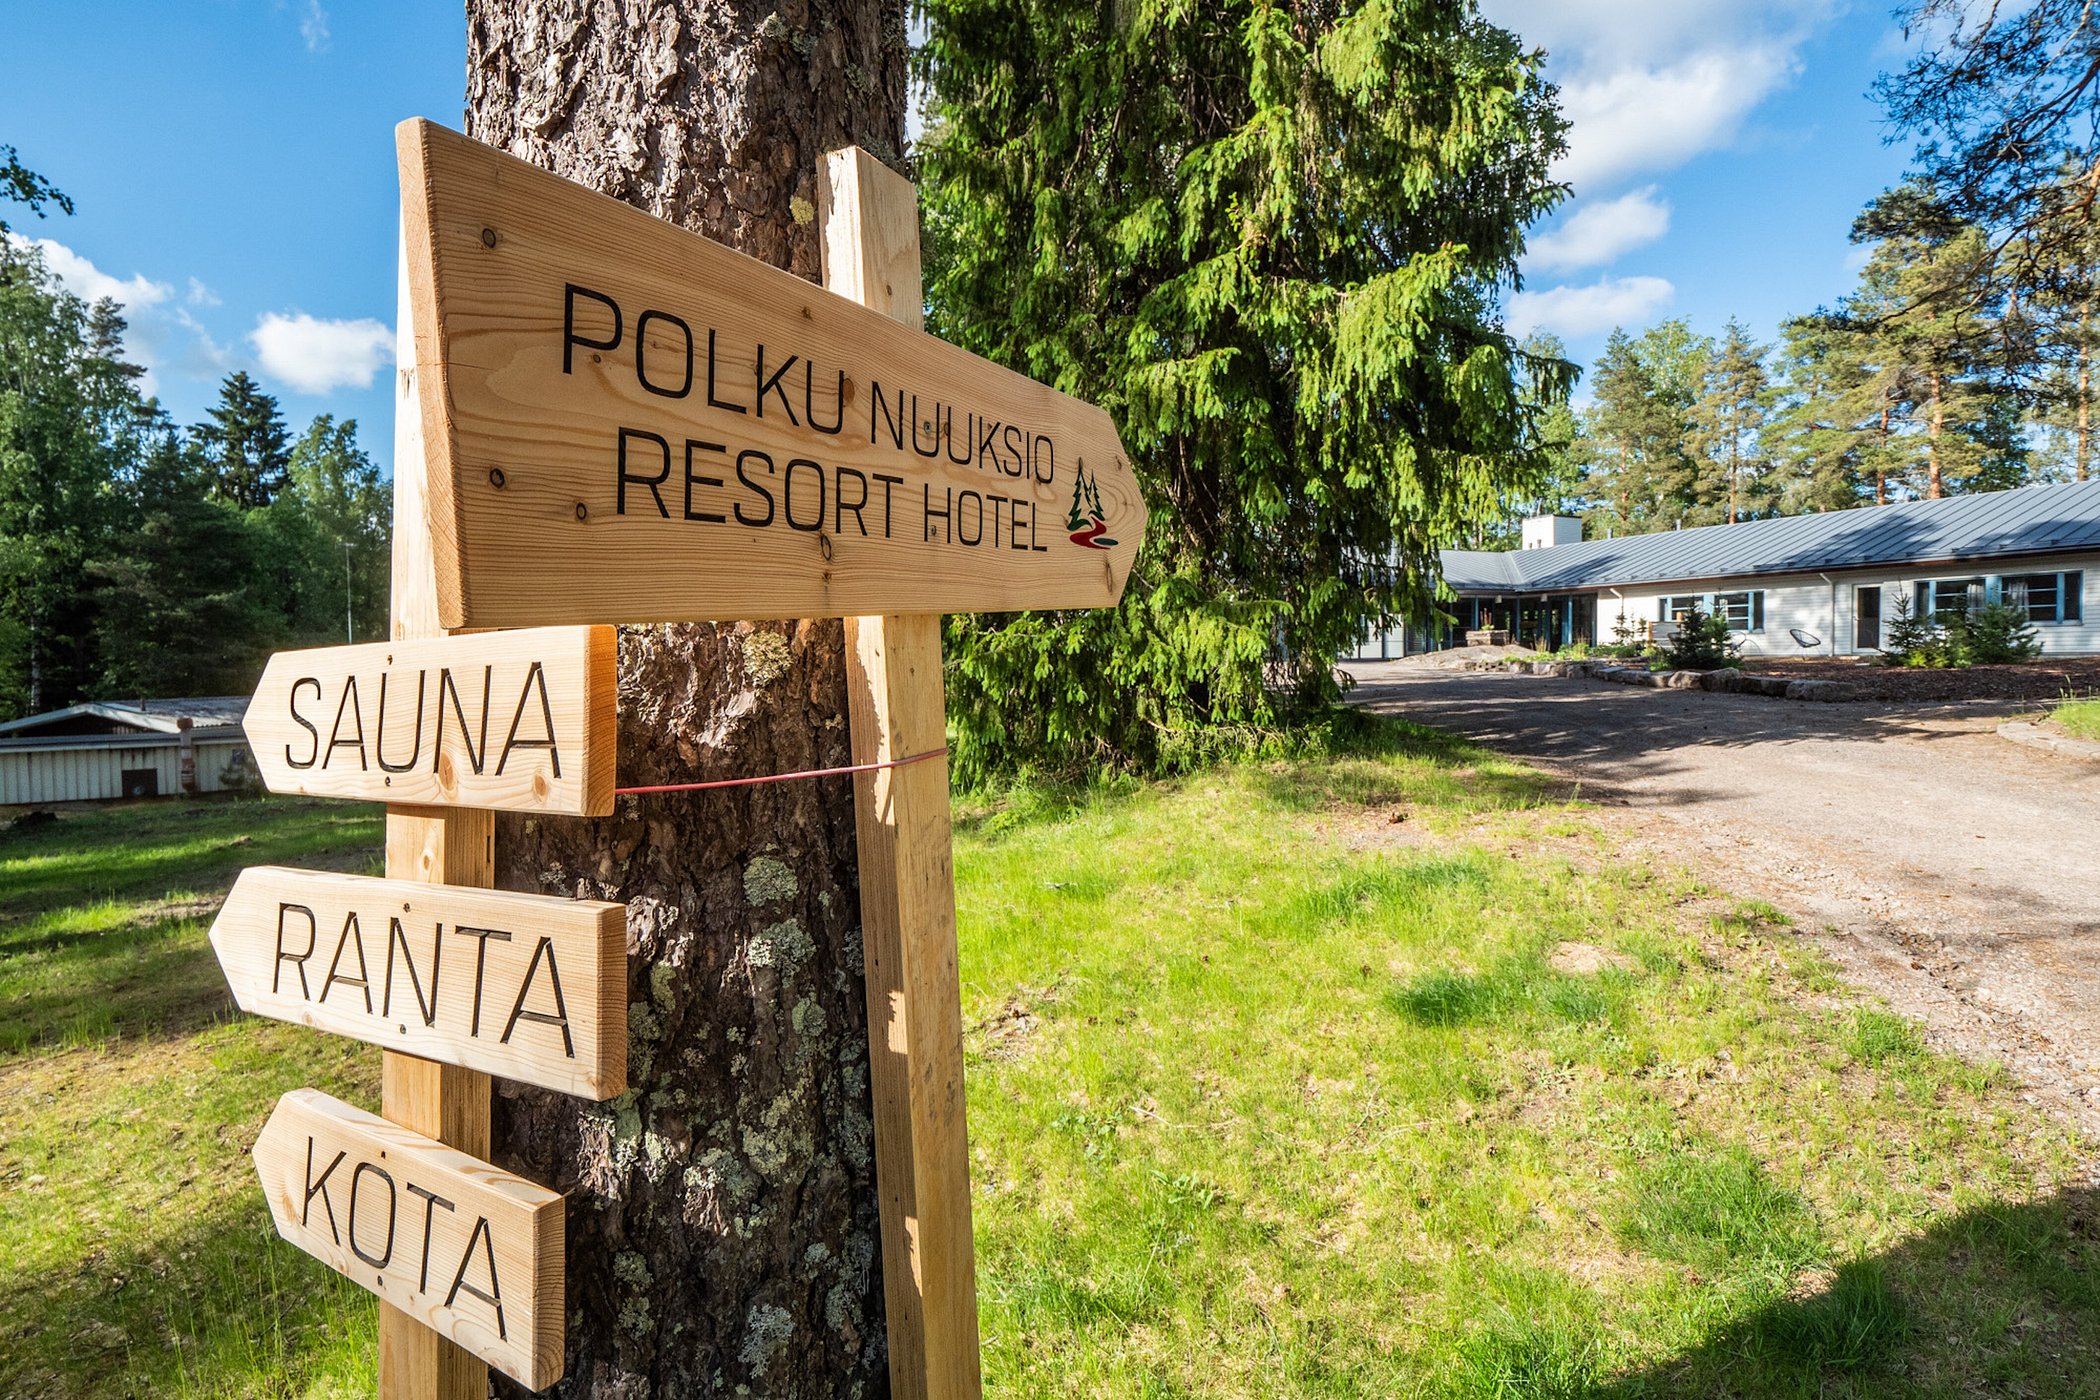 Polku Nuuksio resort hotel image